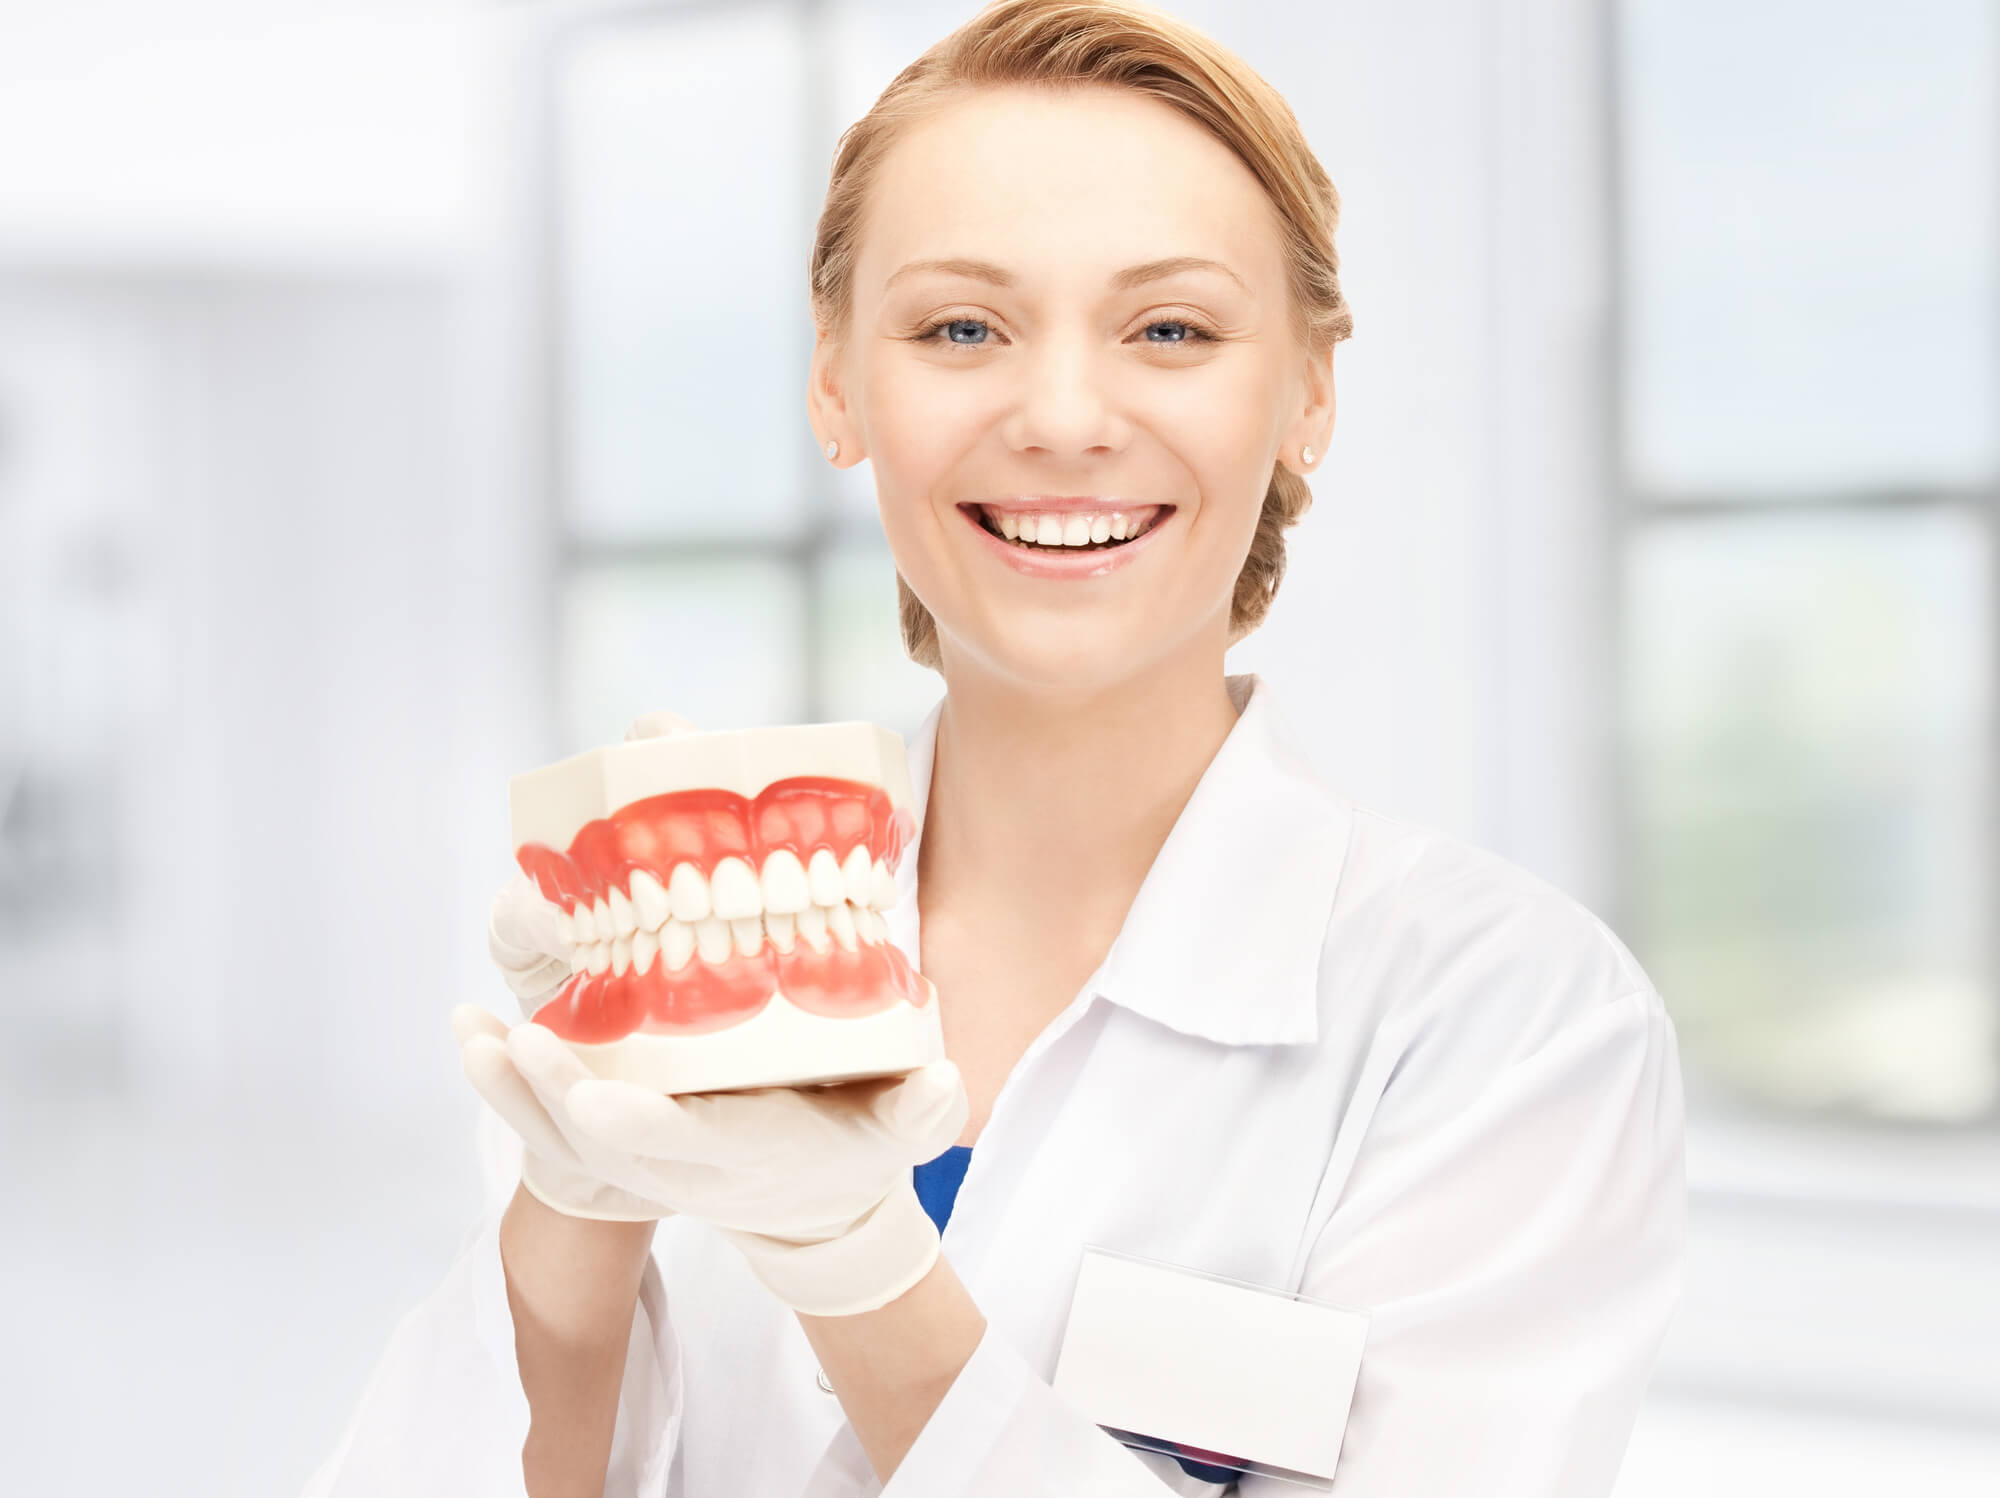 dentist expert in periodontics Miami smiles while holding teeth model